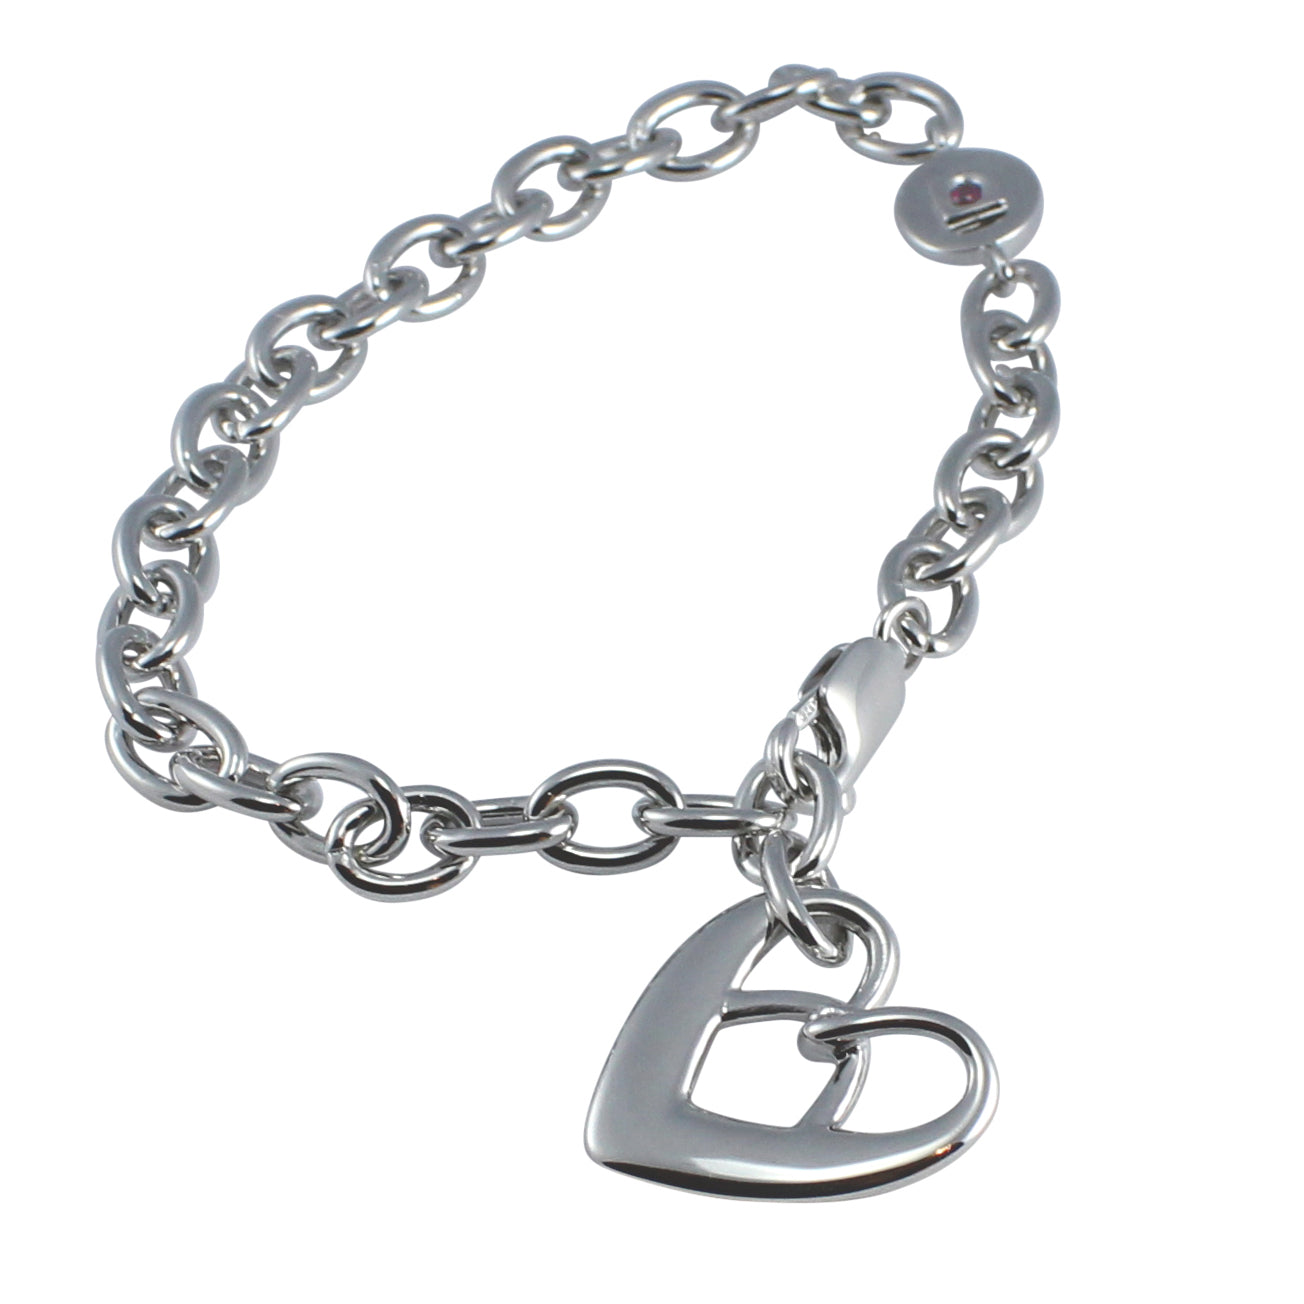 ENRAPTURE - Sterling Silver Entwined Heart Bracelet